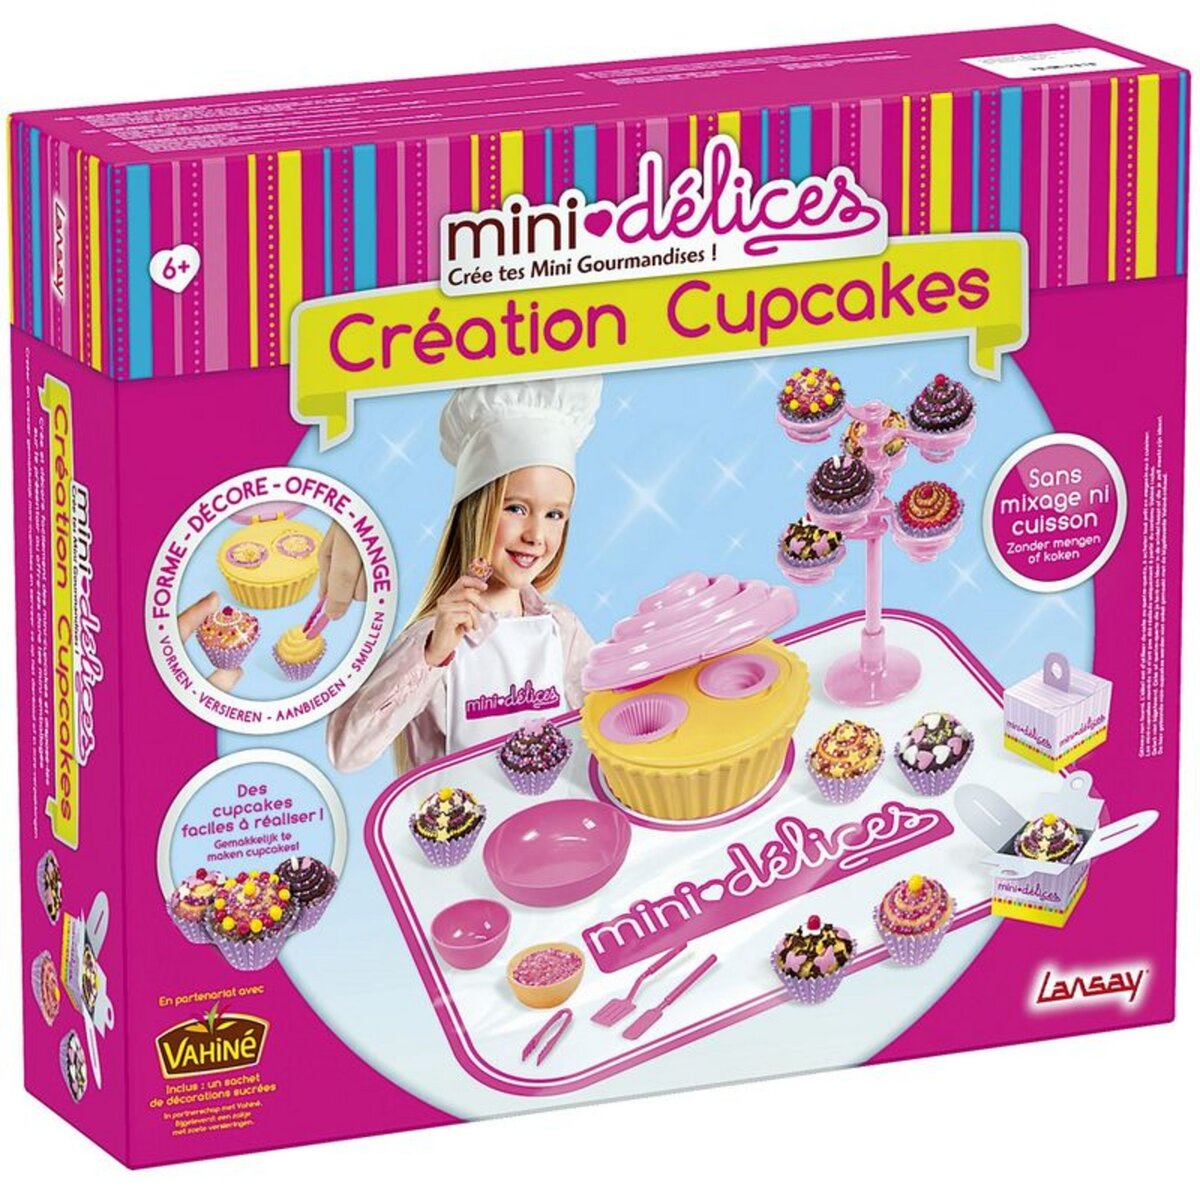 LANSAY Mini délices création cupcakes